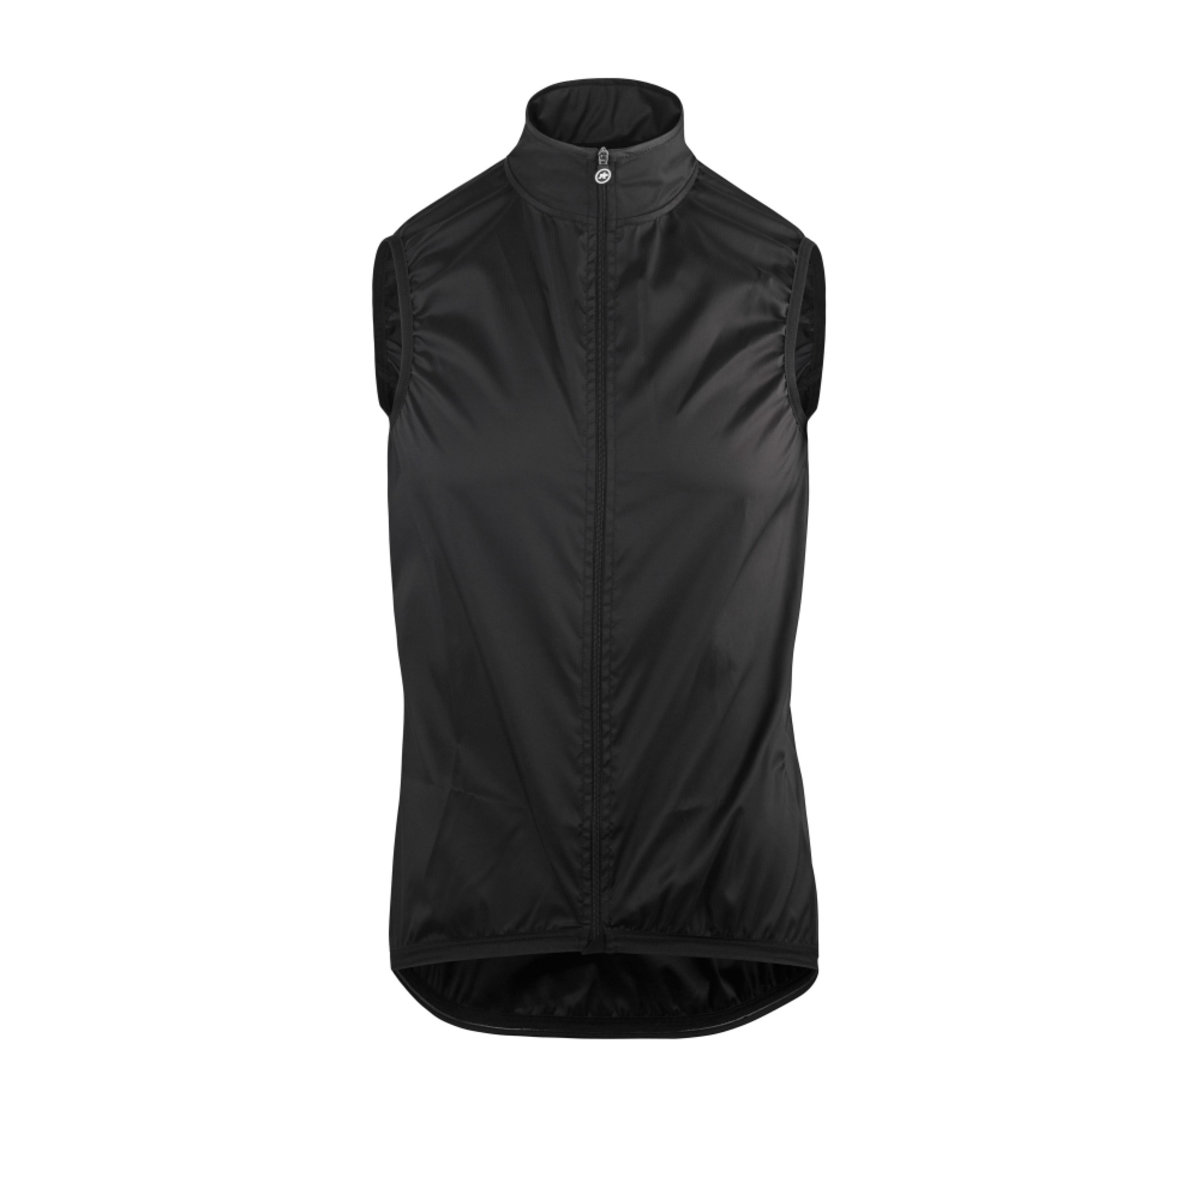 Жилетка ASSOS Mille GT Wind Vest Black Series, мужская, черная, XS фото 1